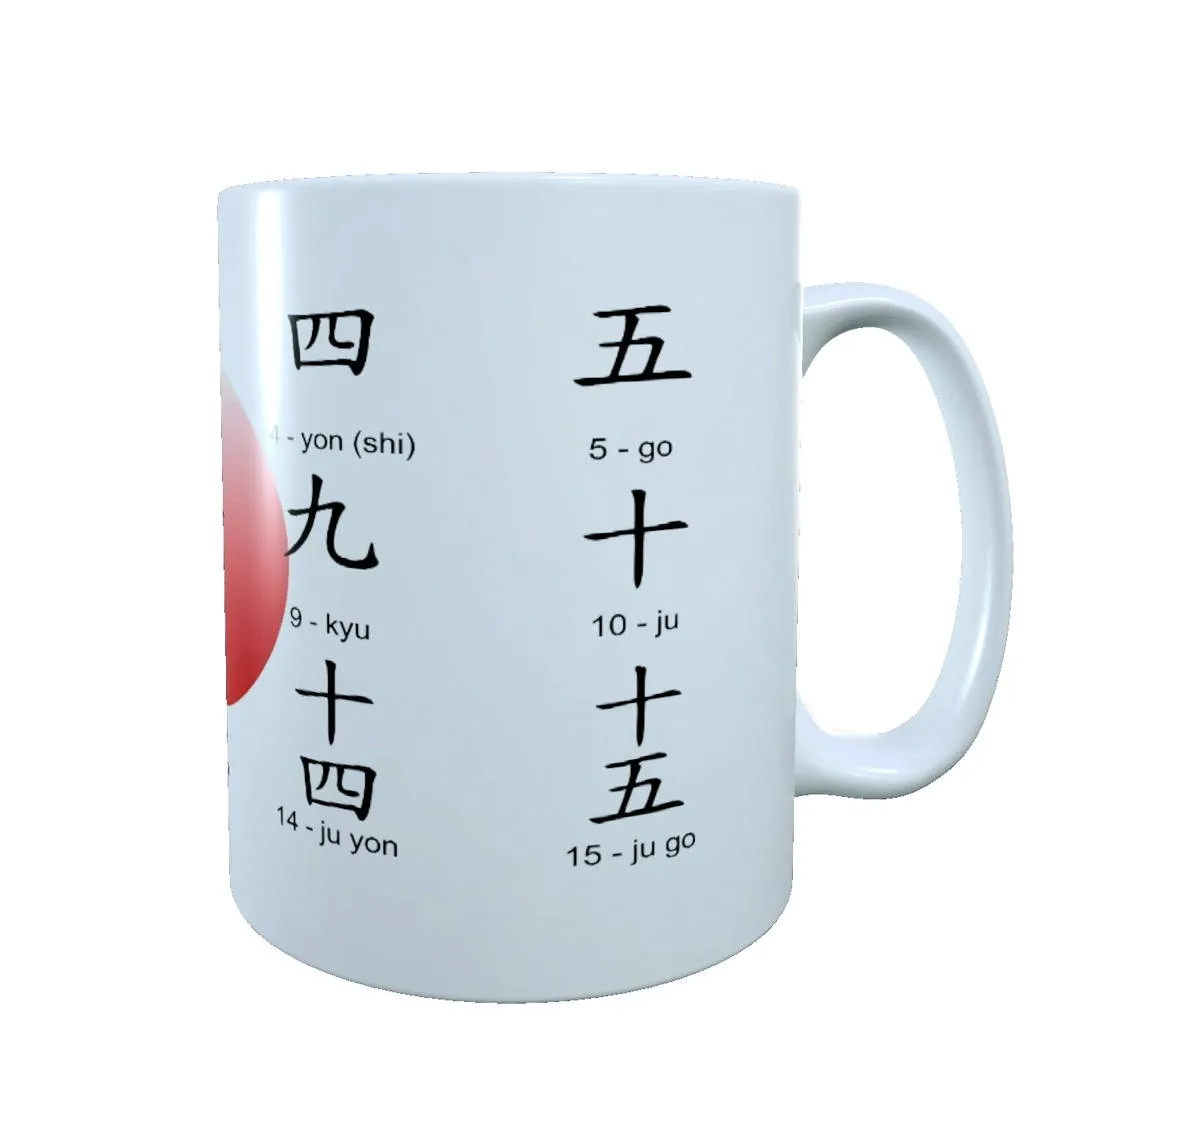 Mug - Coffee cup - Japanese numbers cup